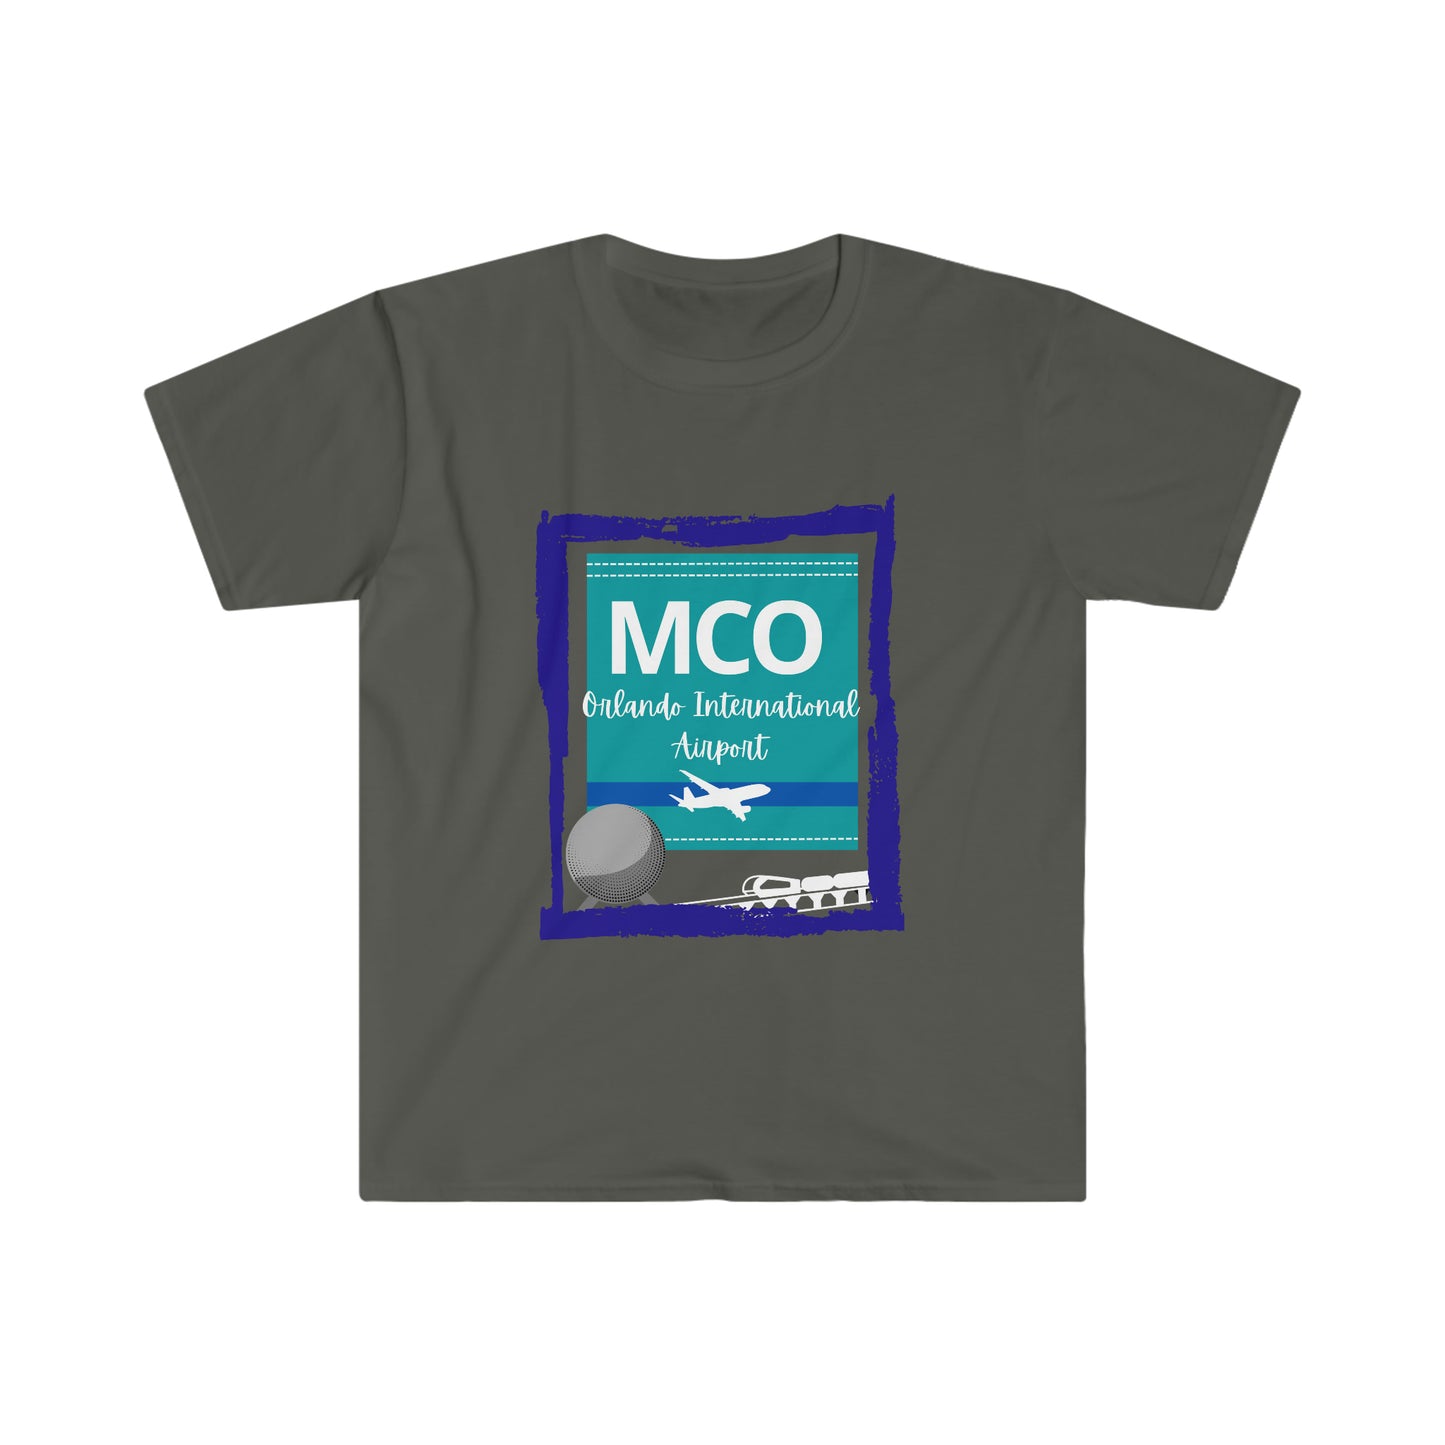 MCO Airport T-shirt for Orlando International Airport